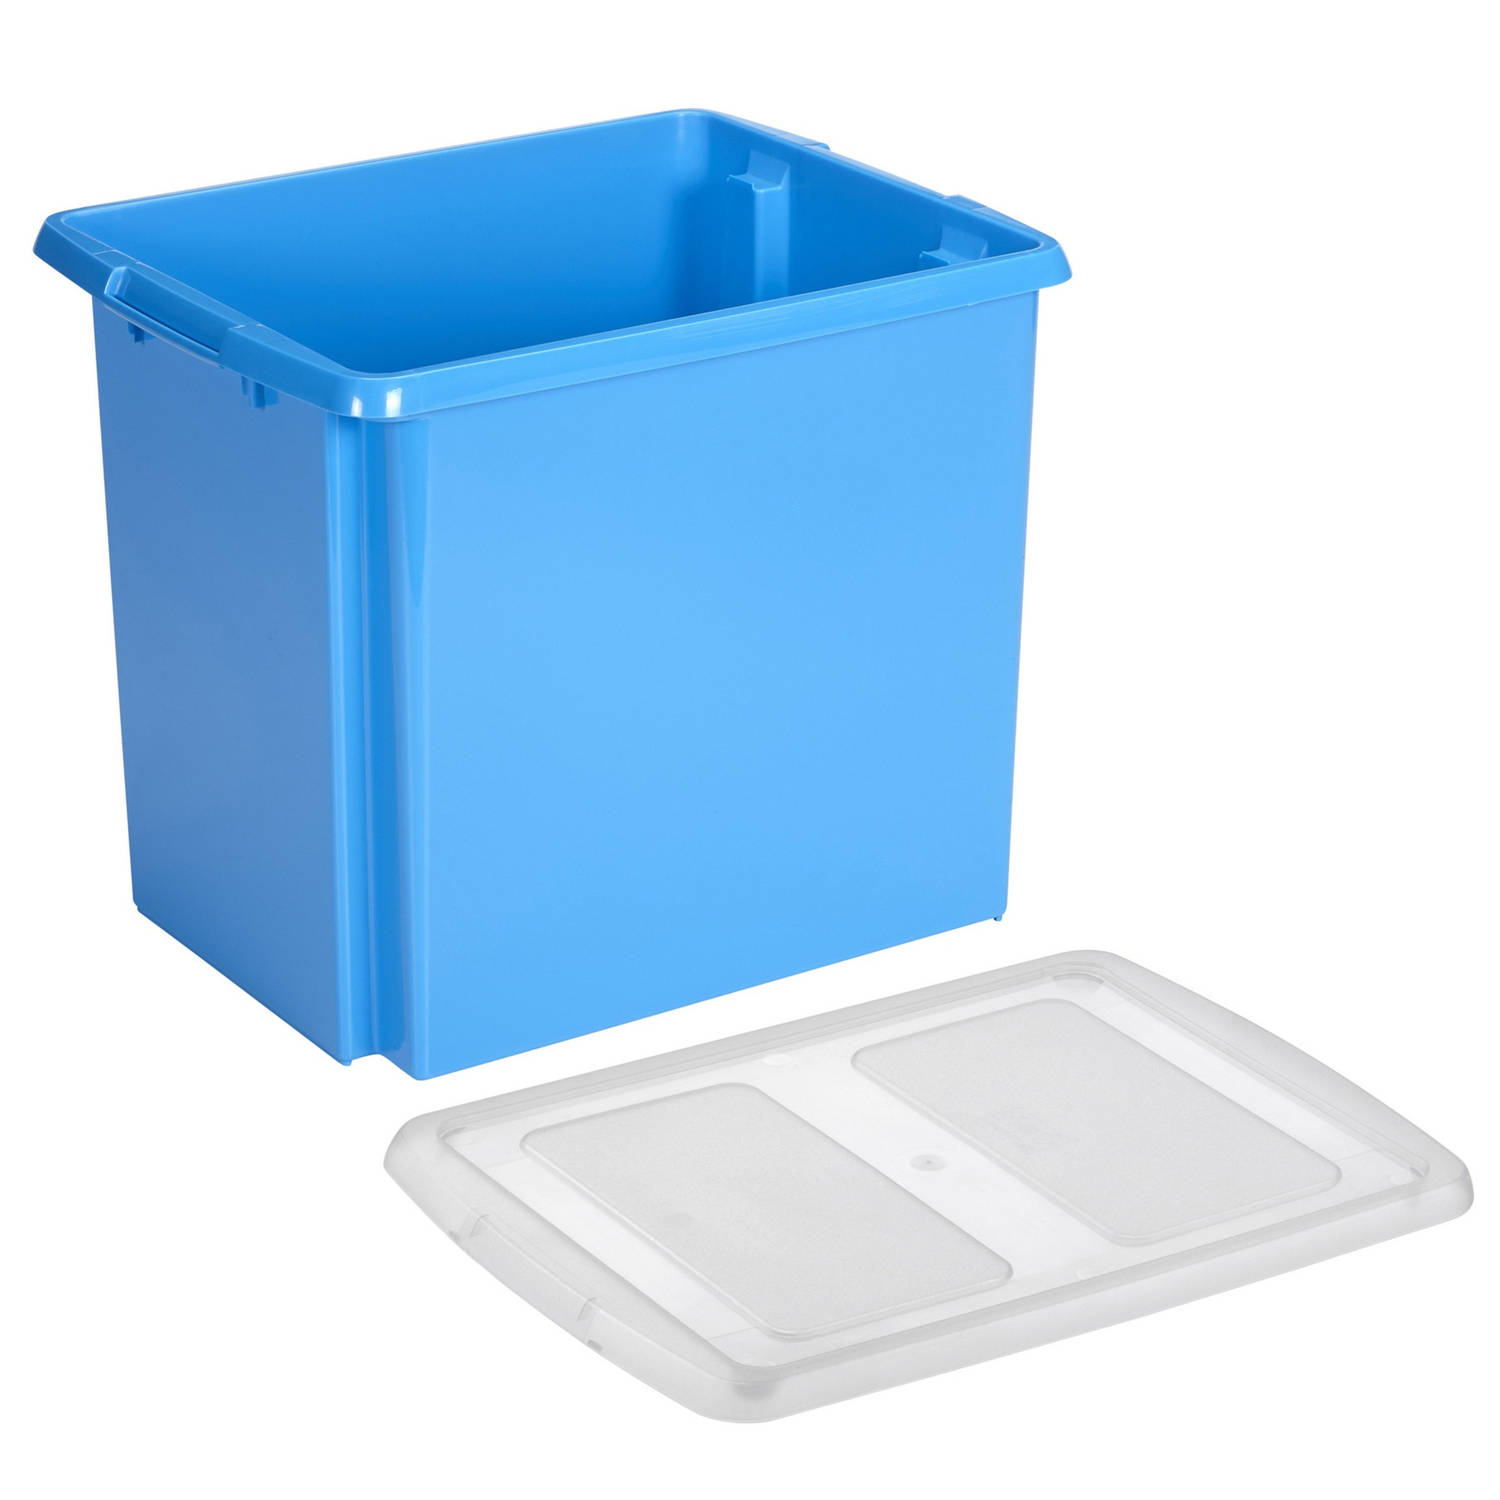 Sunware opslagbox kunststof liter blauw 45 x 36 x 36 cm met deksel - Opbergbox | Blokker